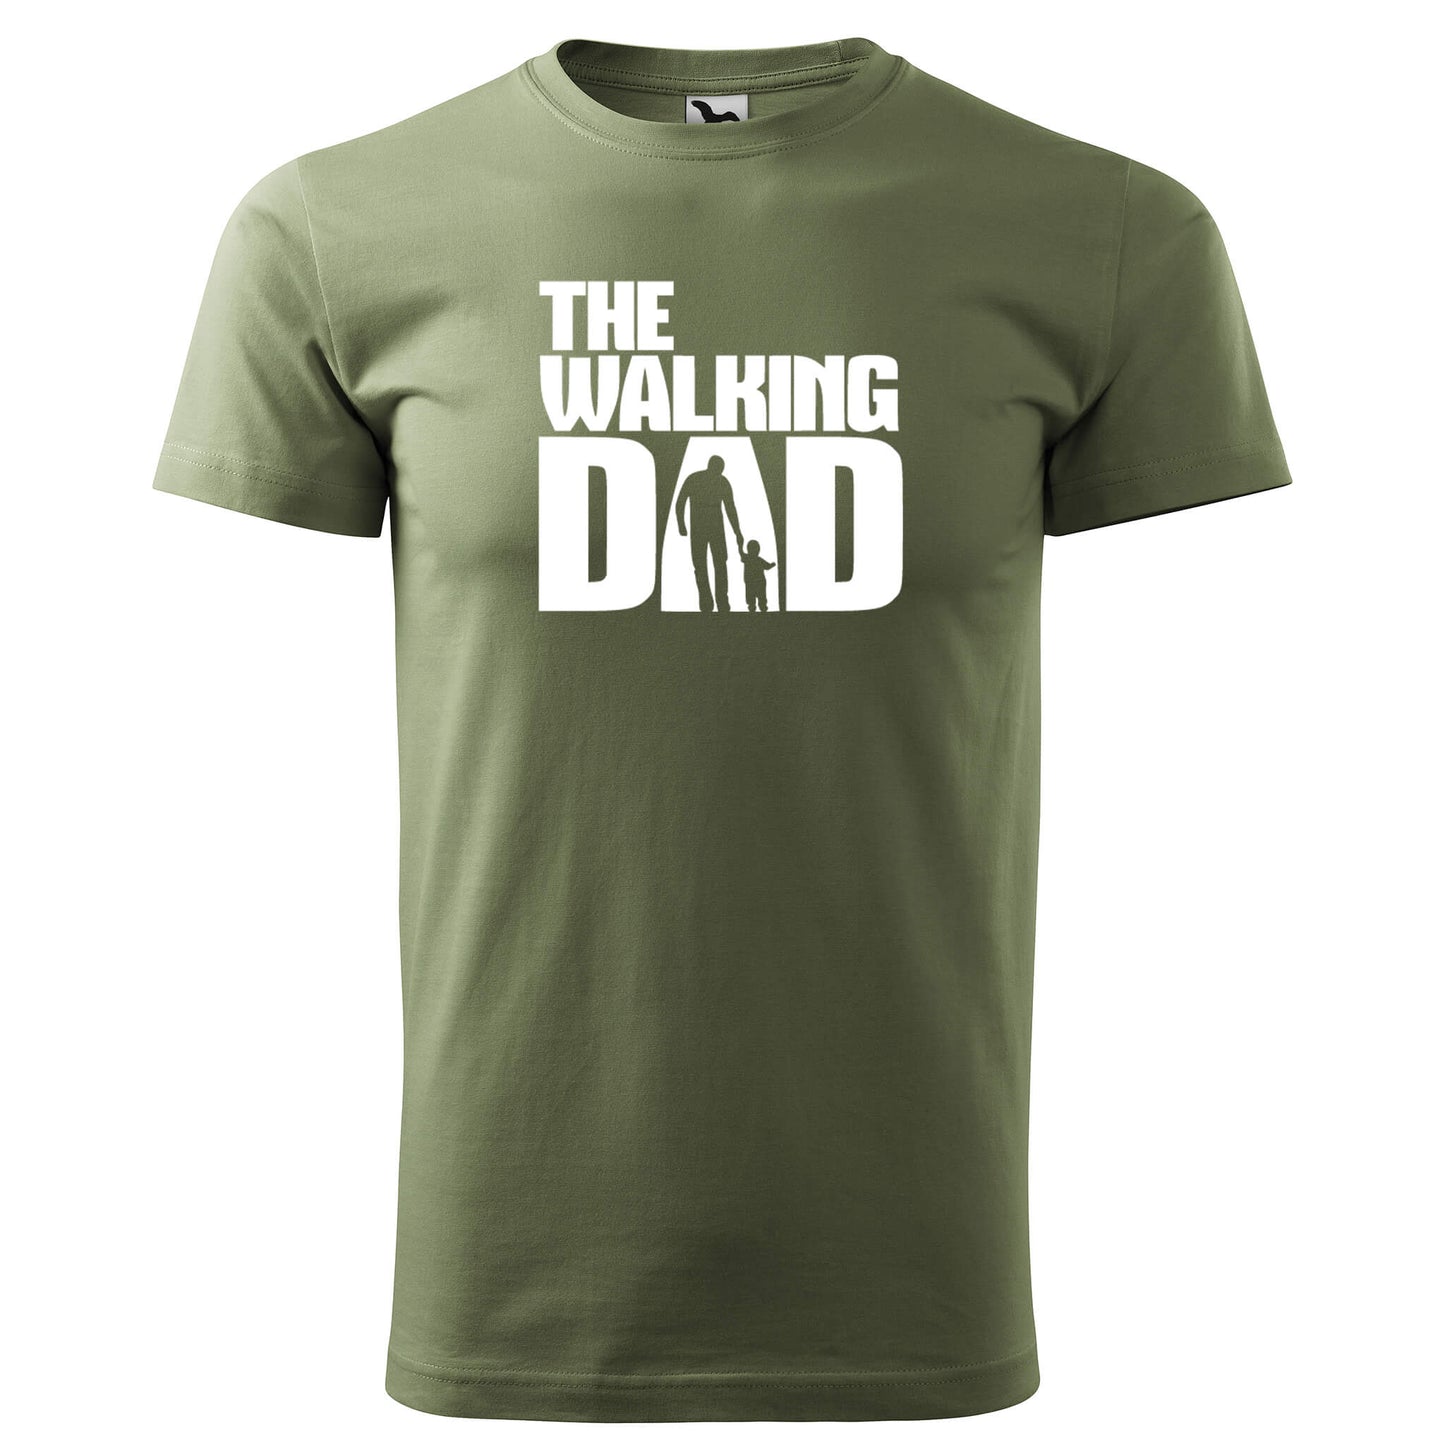 T-shirt - The walking dad - rvdesignprint